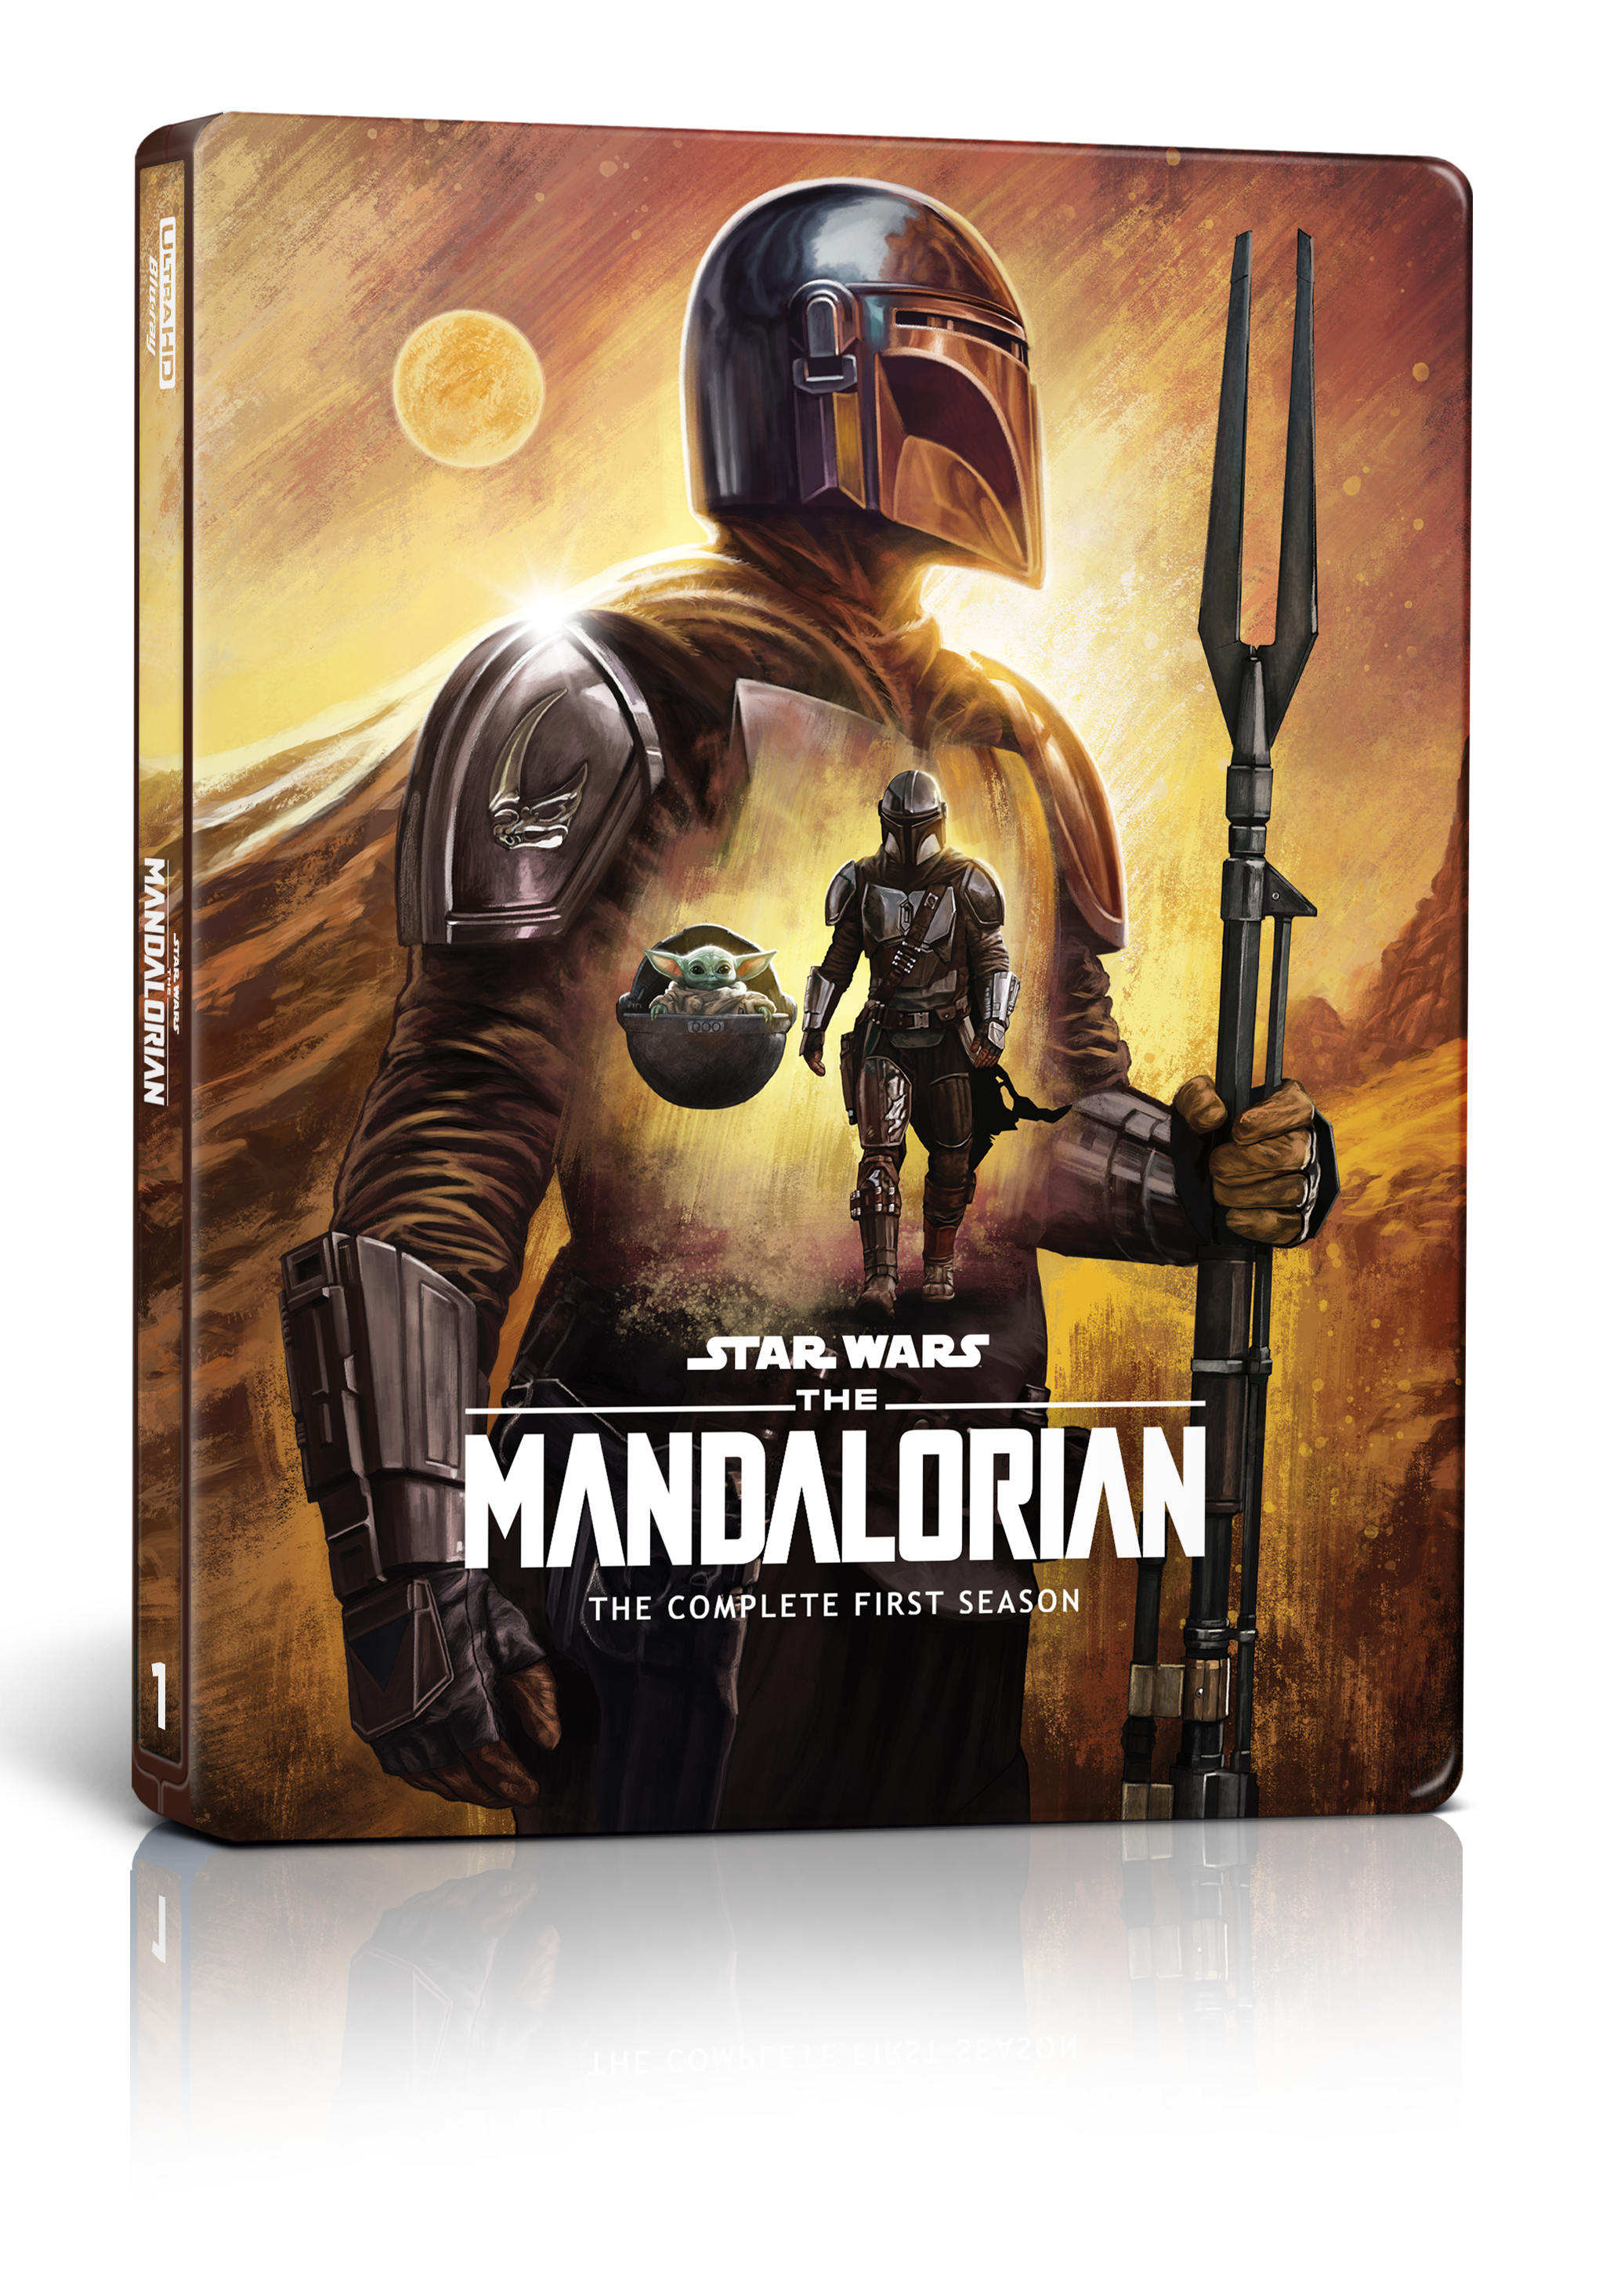 Artwork by The Mandalorian Season 1 Steelbook